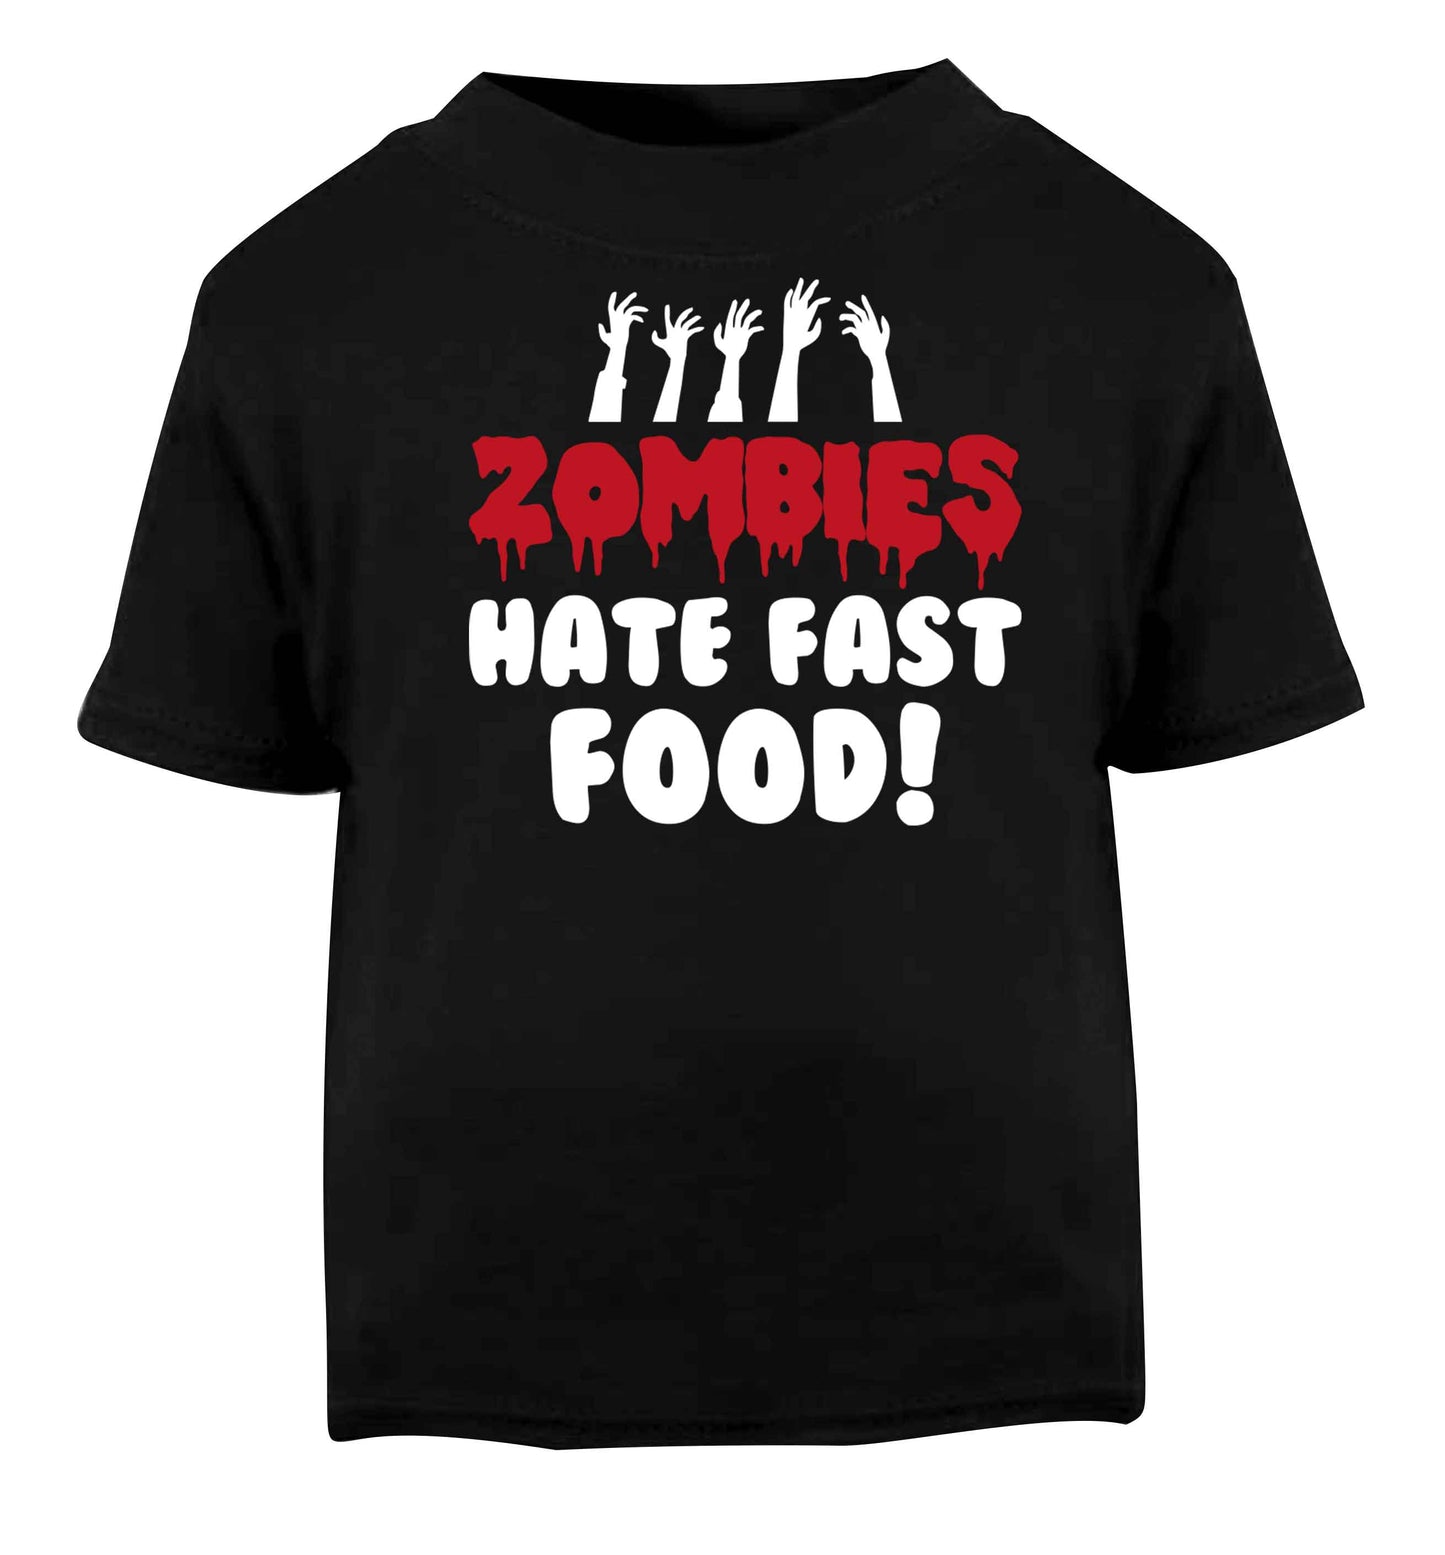 Zombies hate fast food Black baby toddler Tshirt 2 years